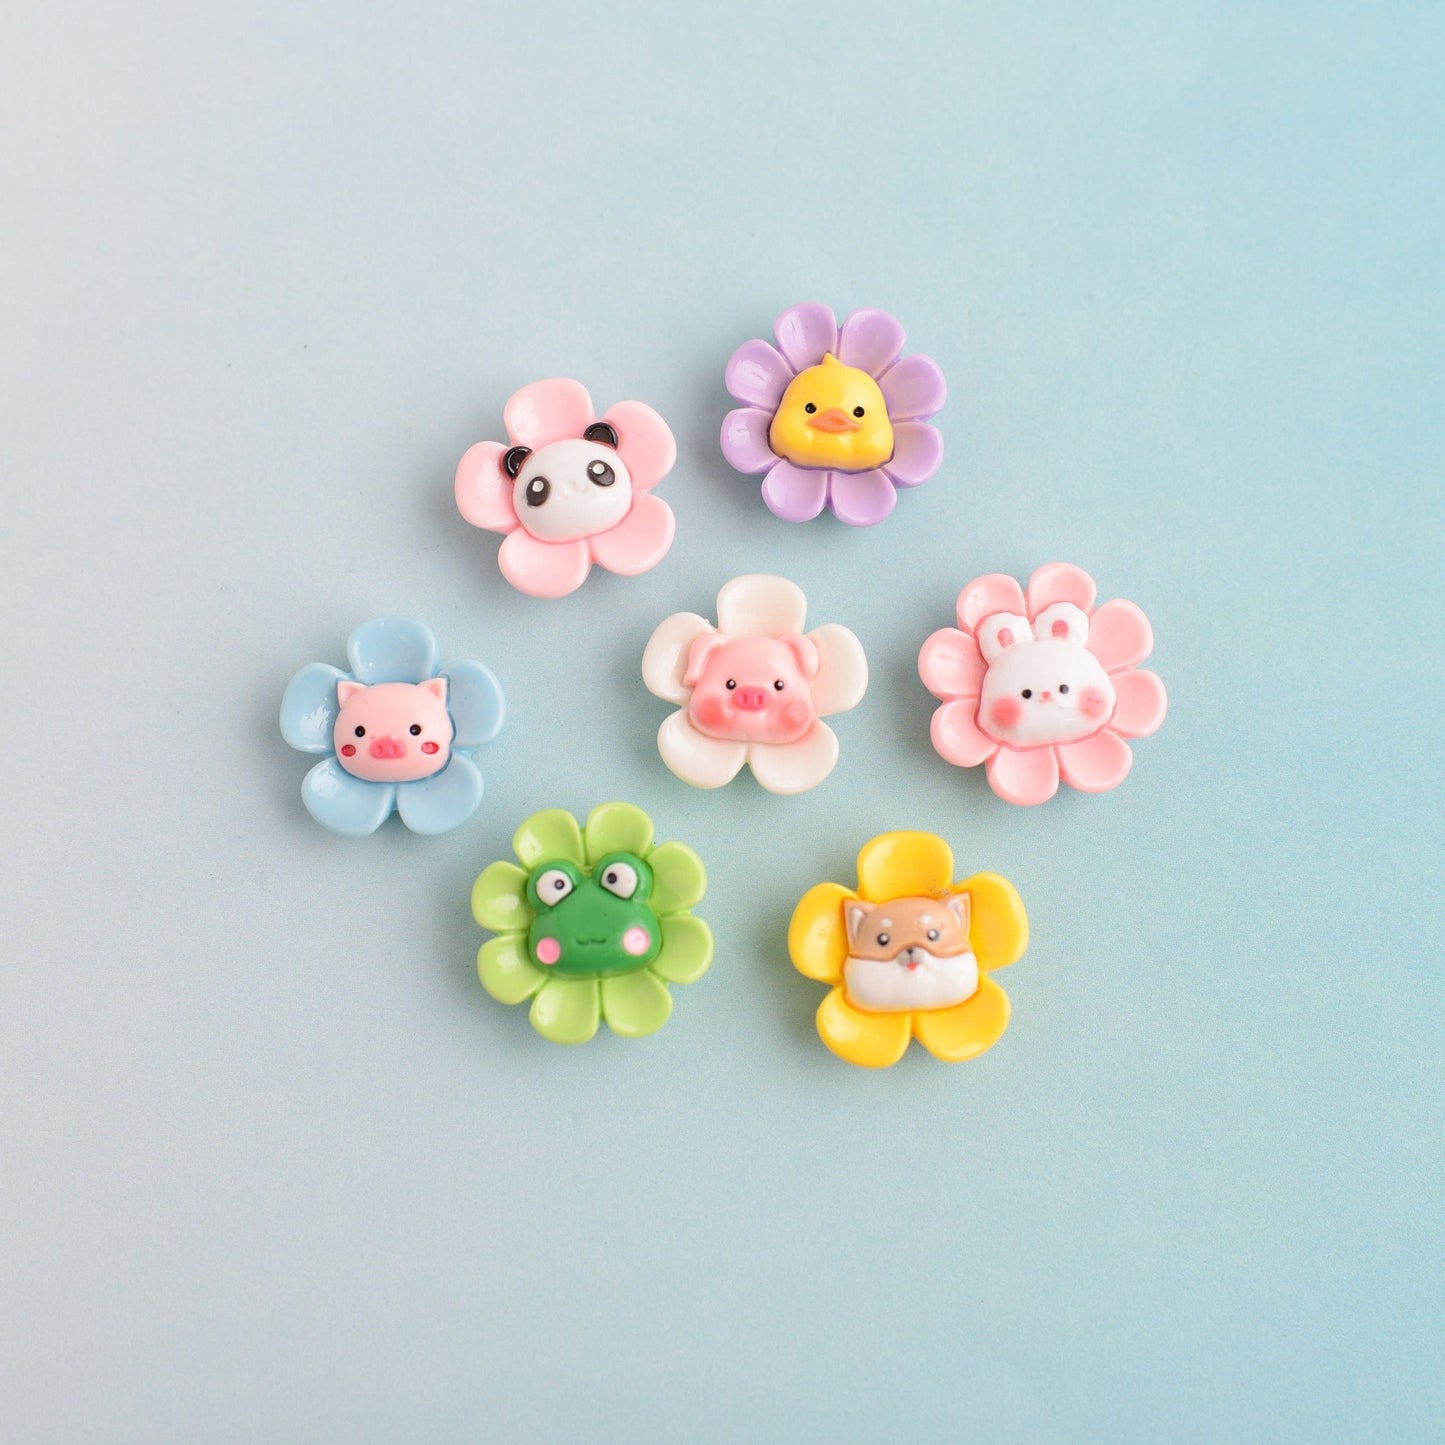 Cute Animal Flower Magnets- Set of 7